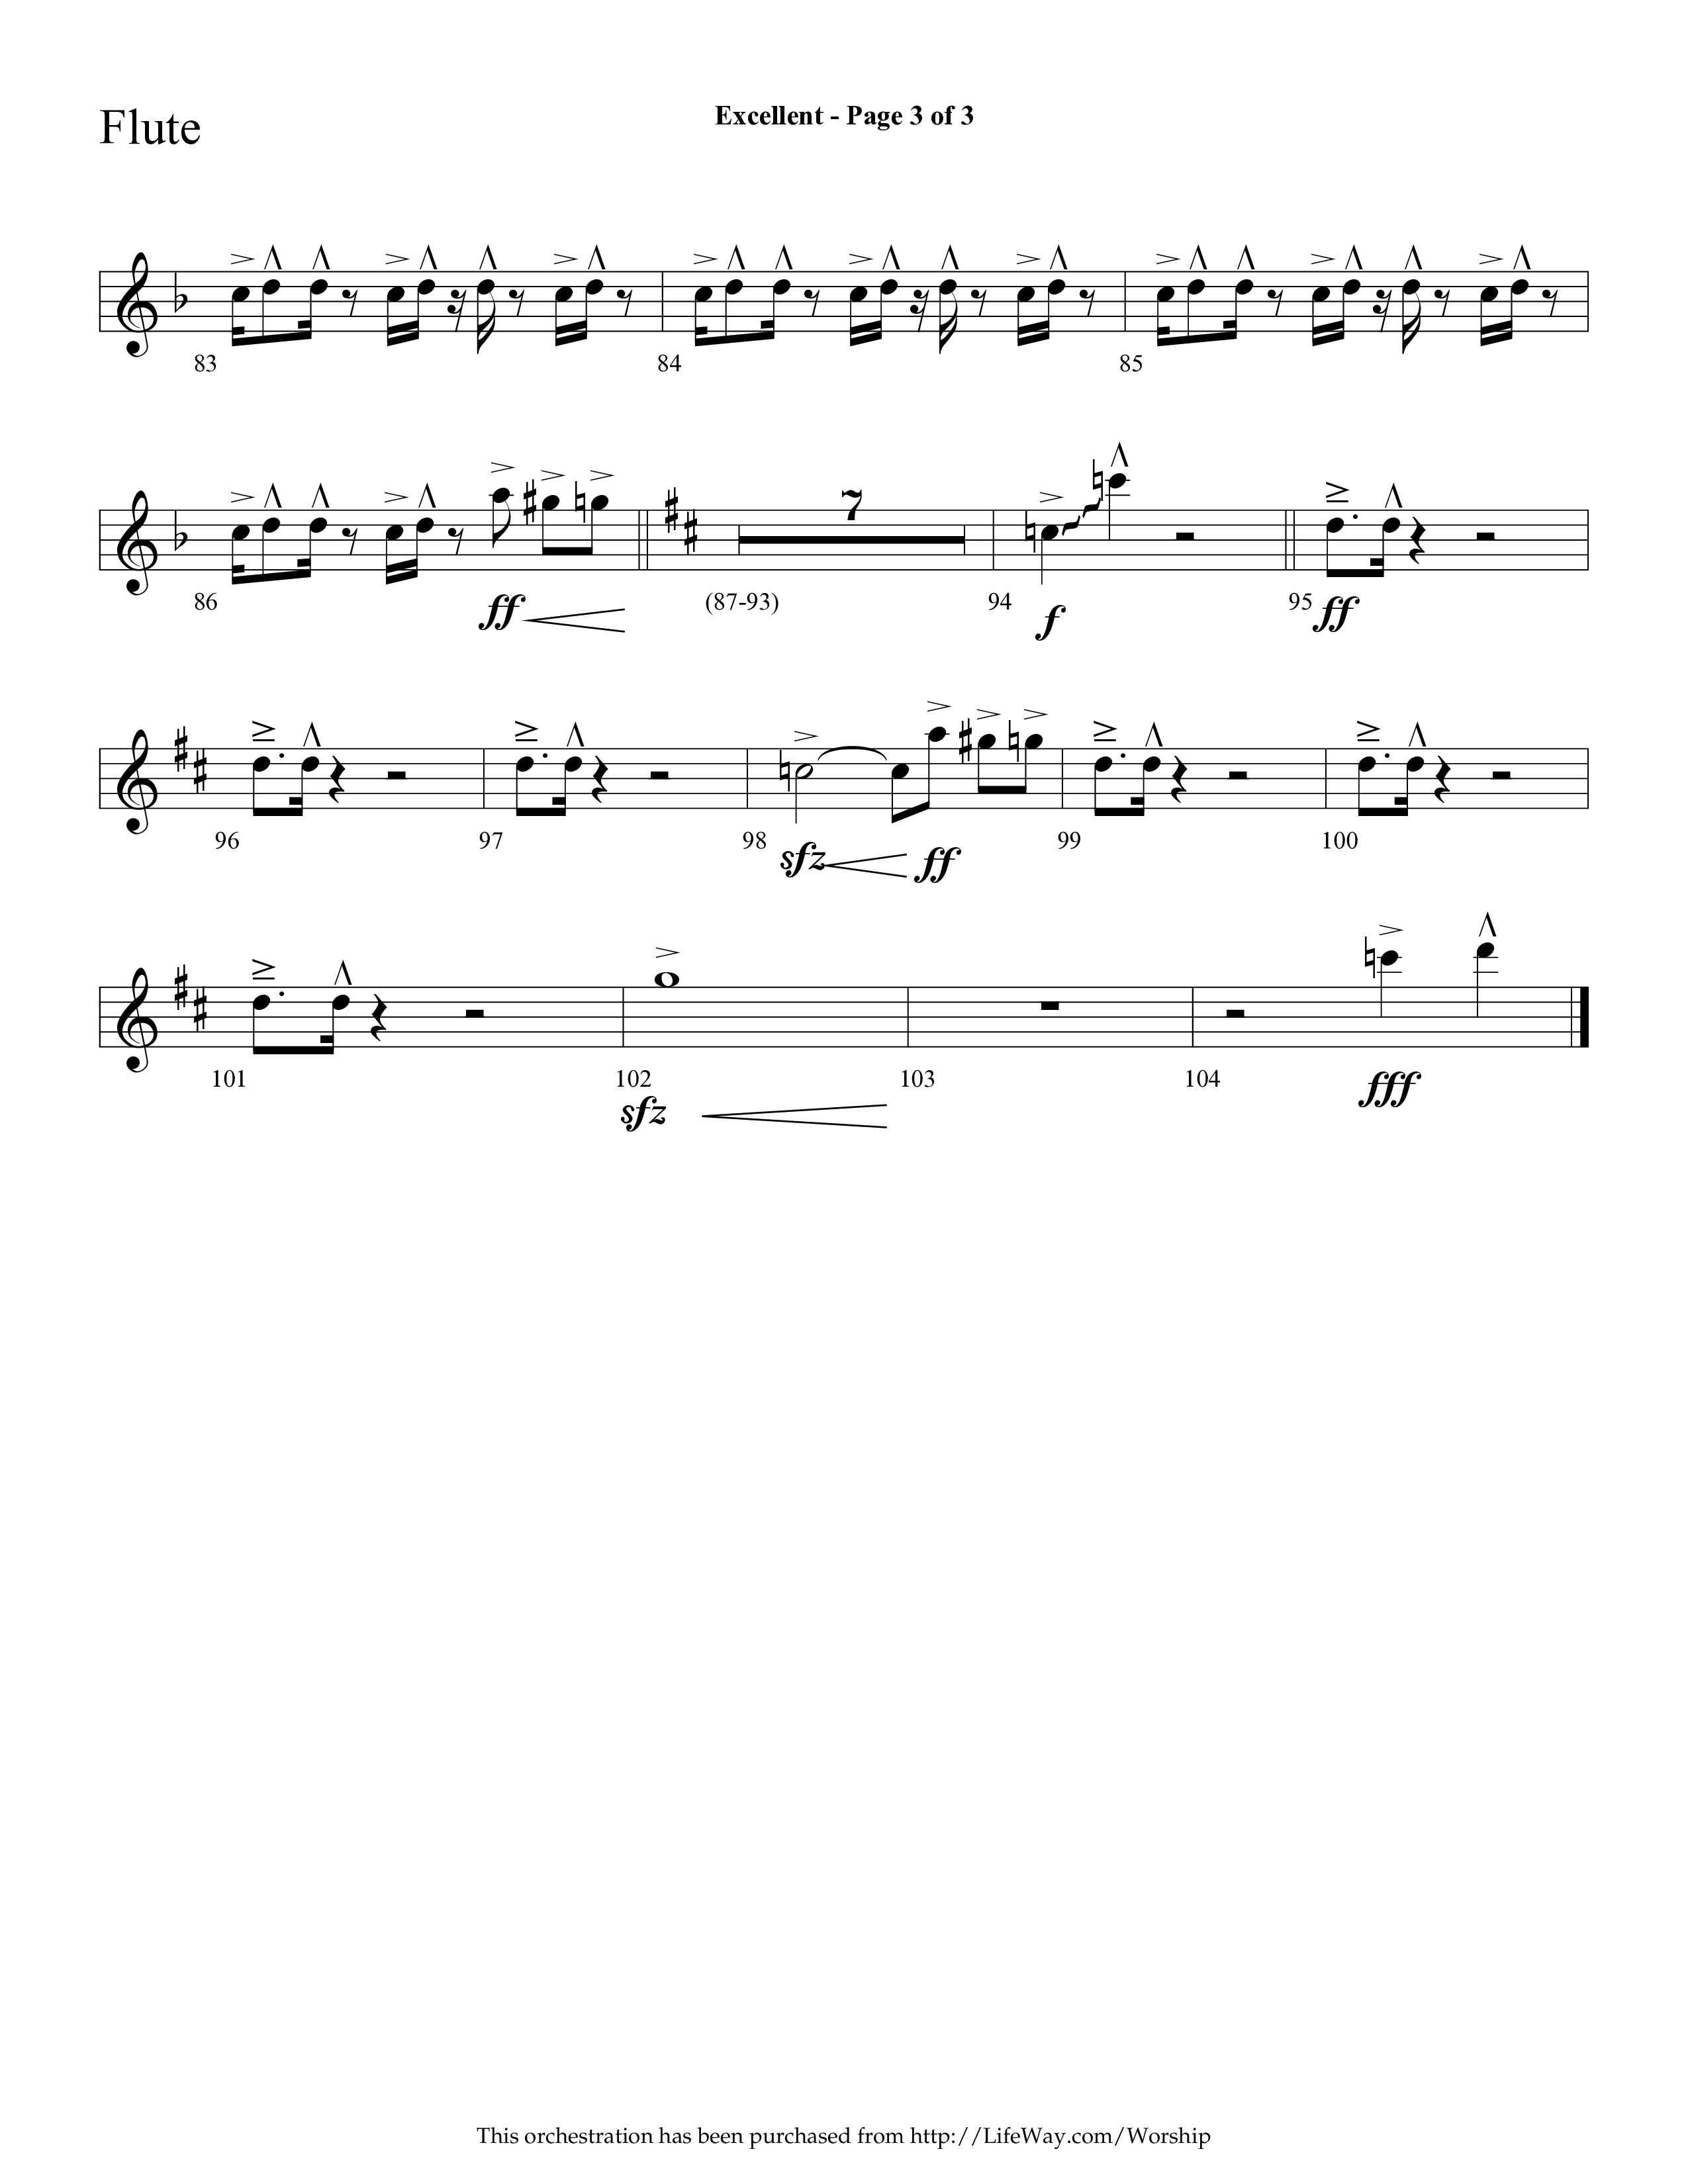 Excellent (Choral Anthem SATB) Flute (Lifeway Choral / Arr. Cliff Duren)